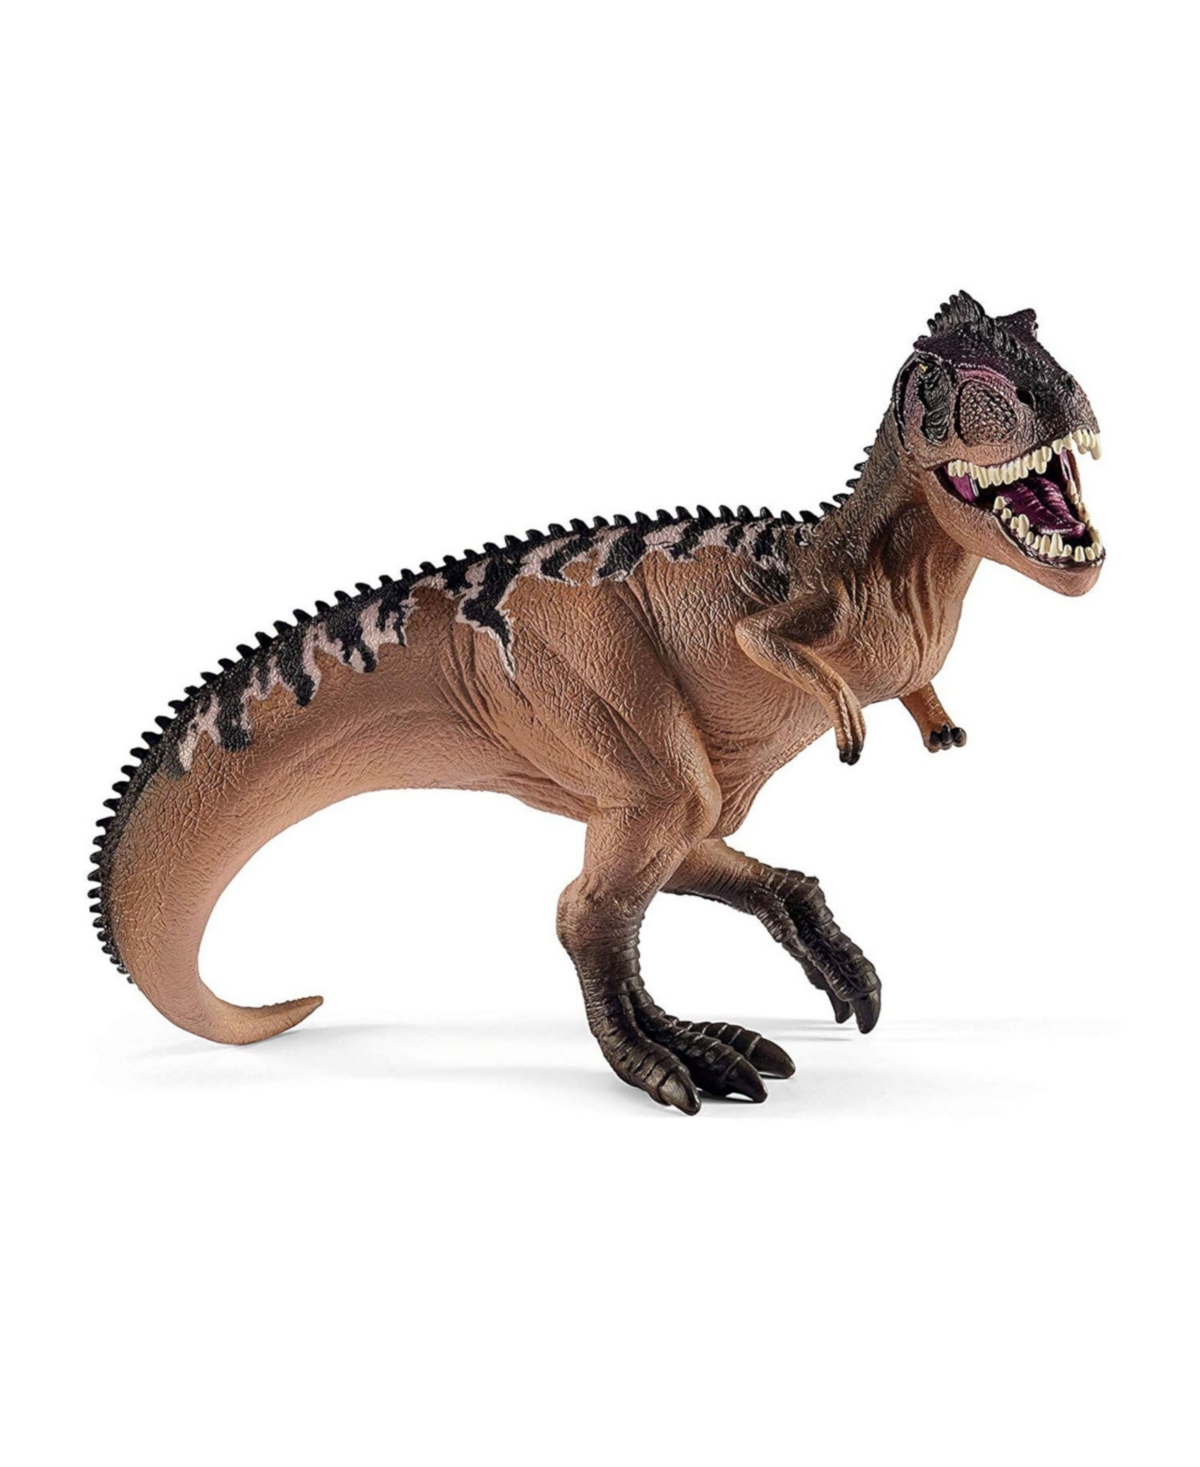 Schleich Kids' Dinosaurs, Giganotosaurus Dinosaur Toy Animal Figure In Multi